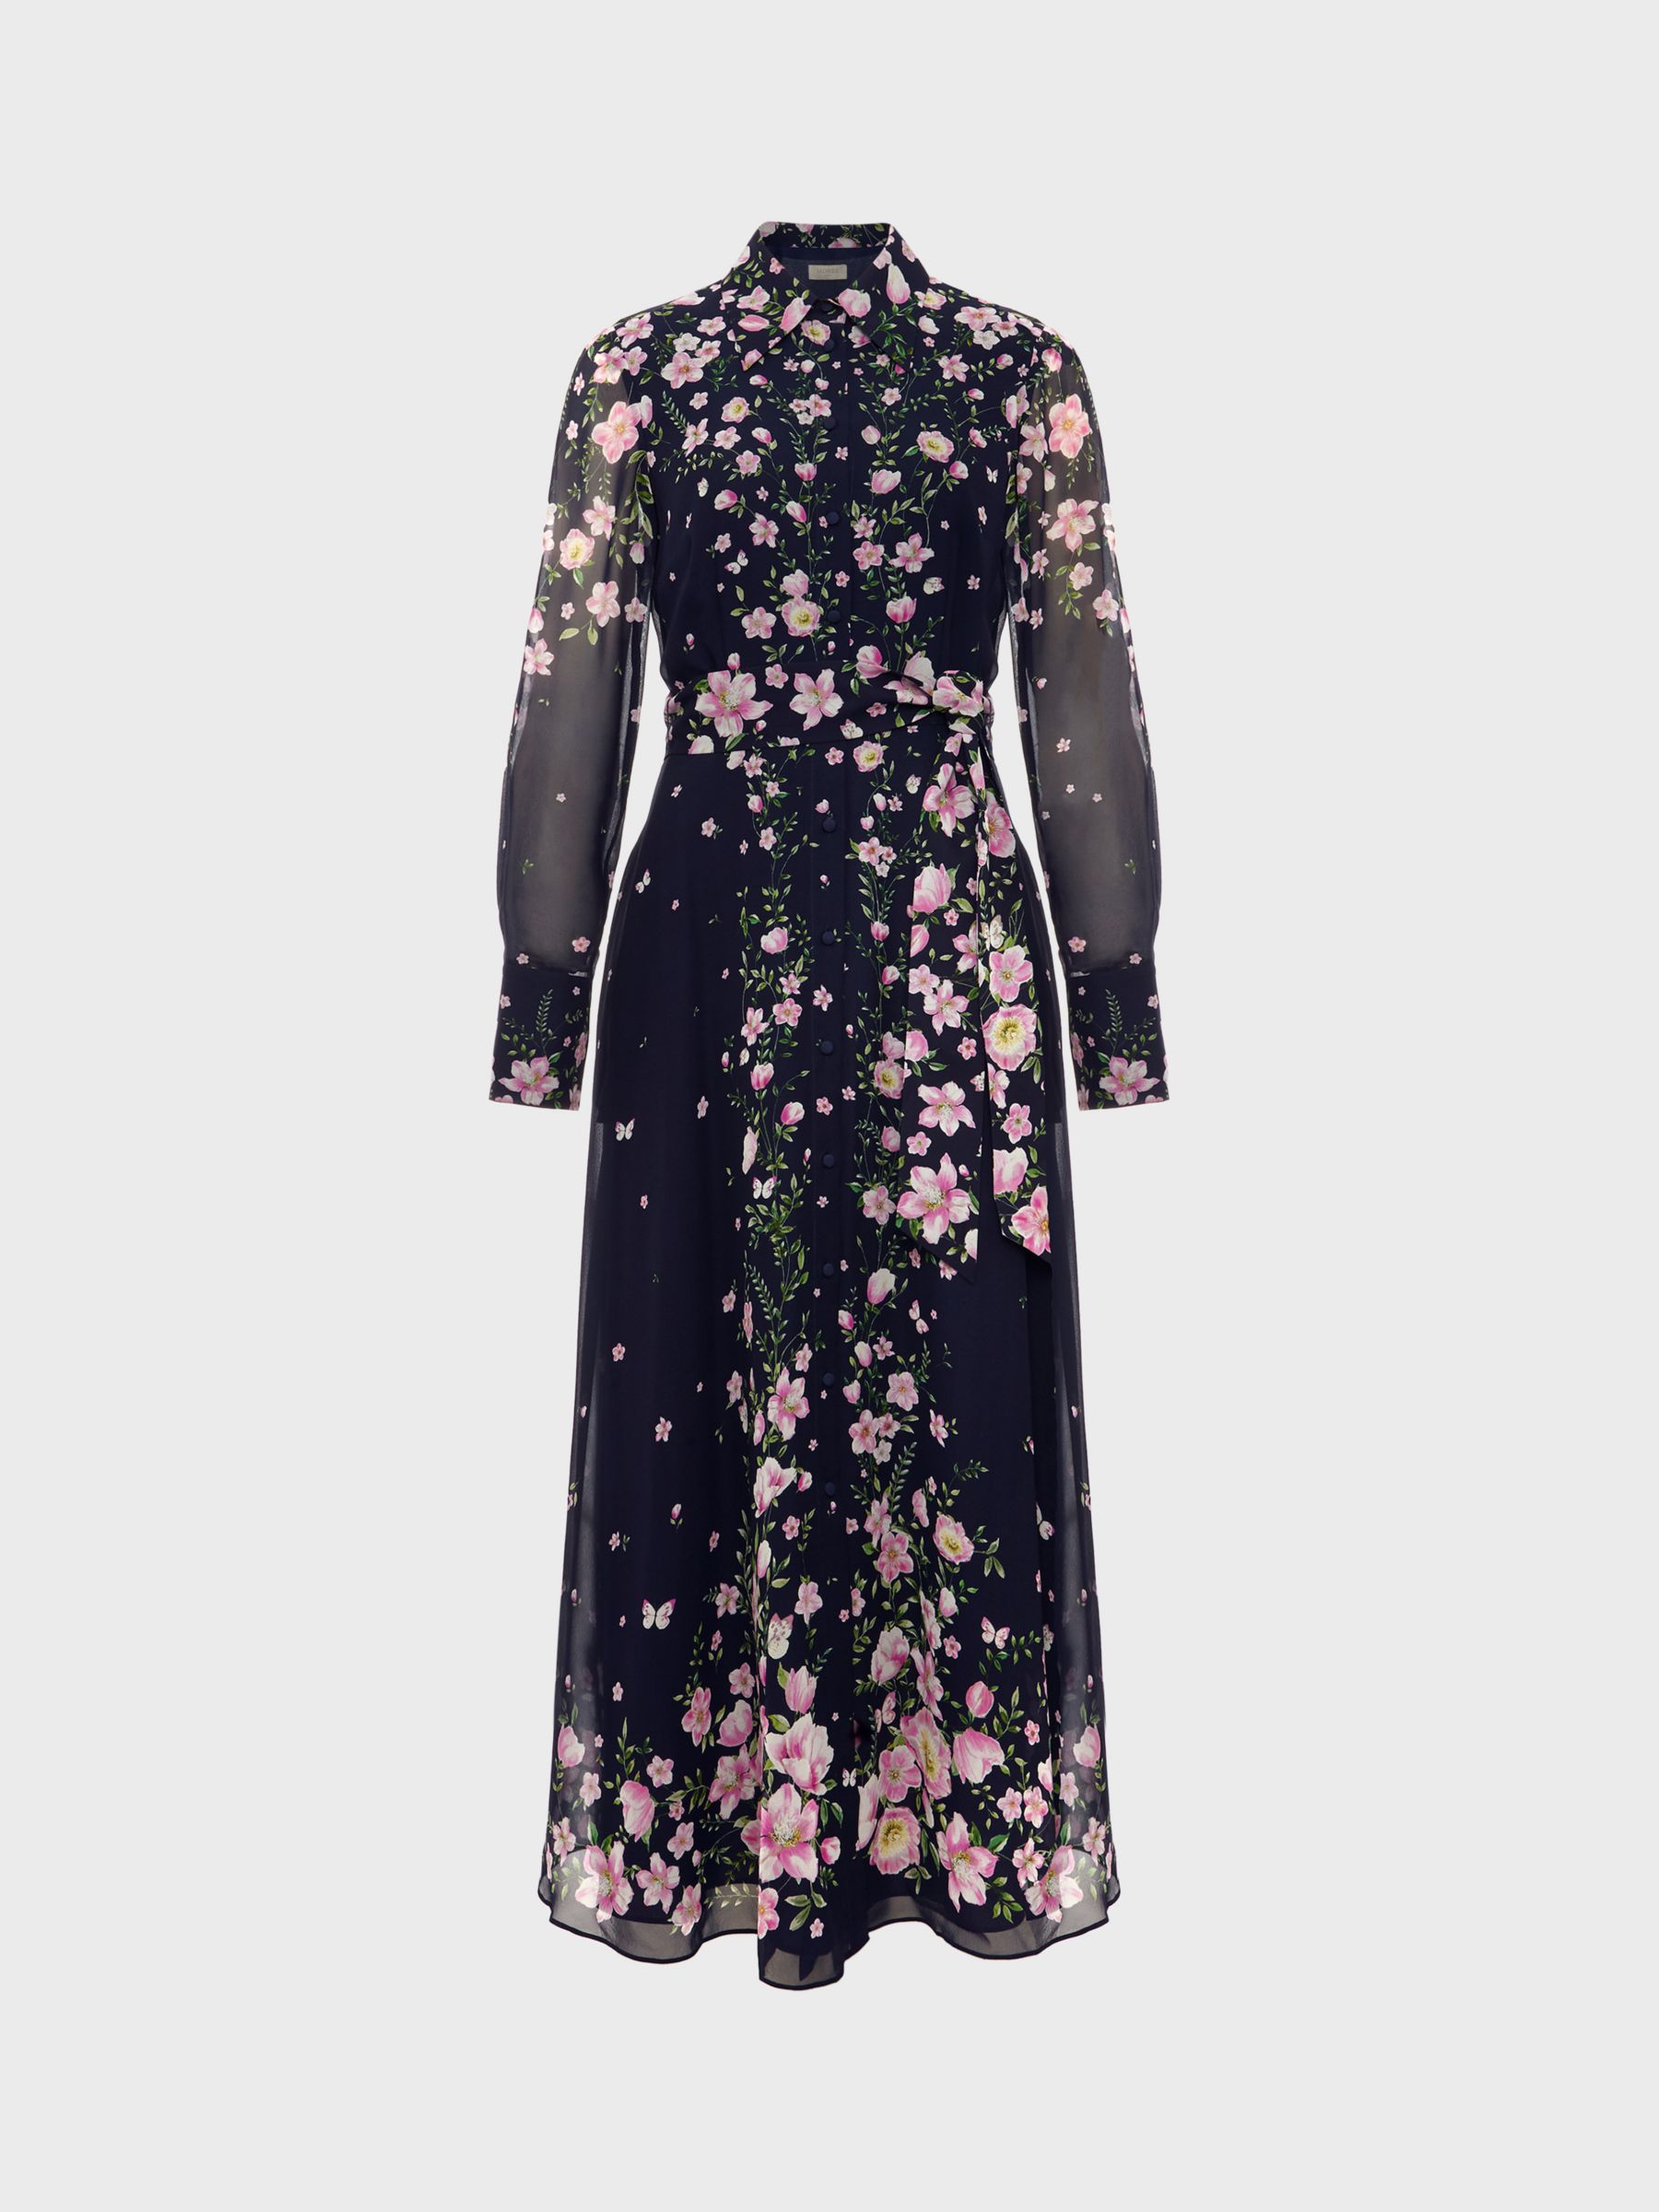 Hobbs Juliet Floral Print Silk Maxi Dress, Navy/Multi, 12